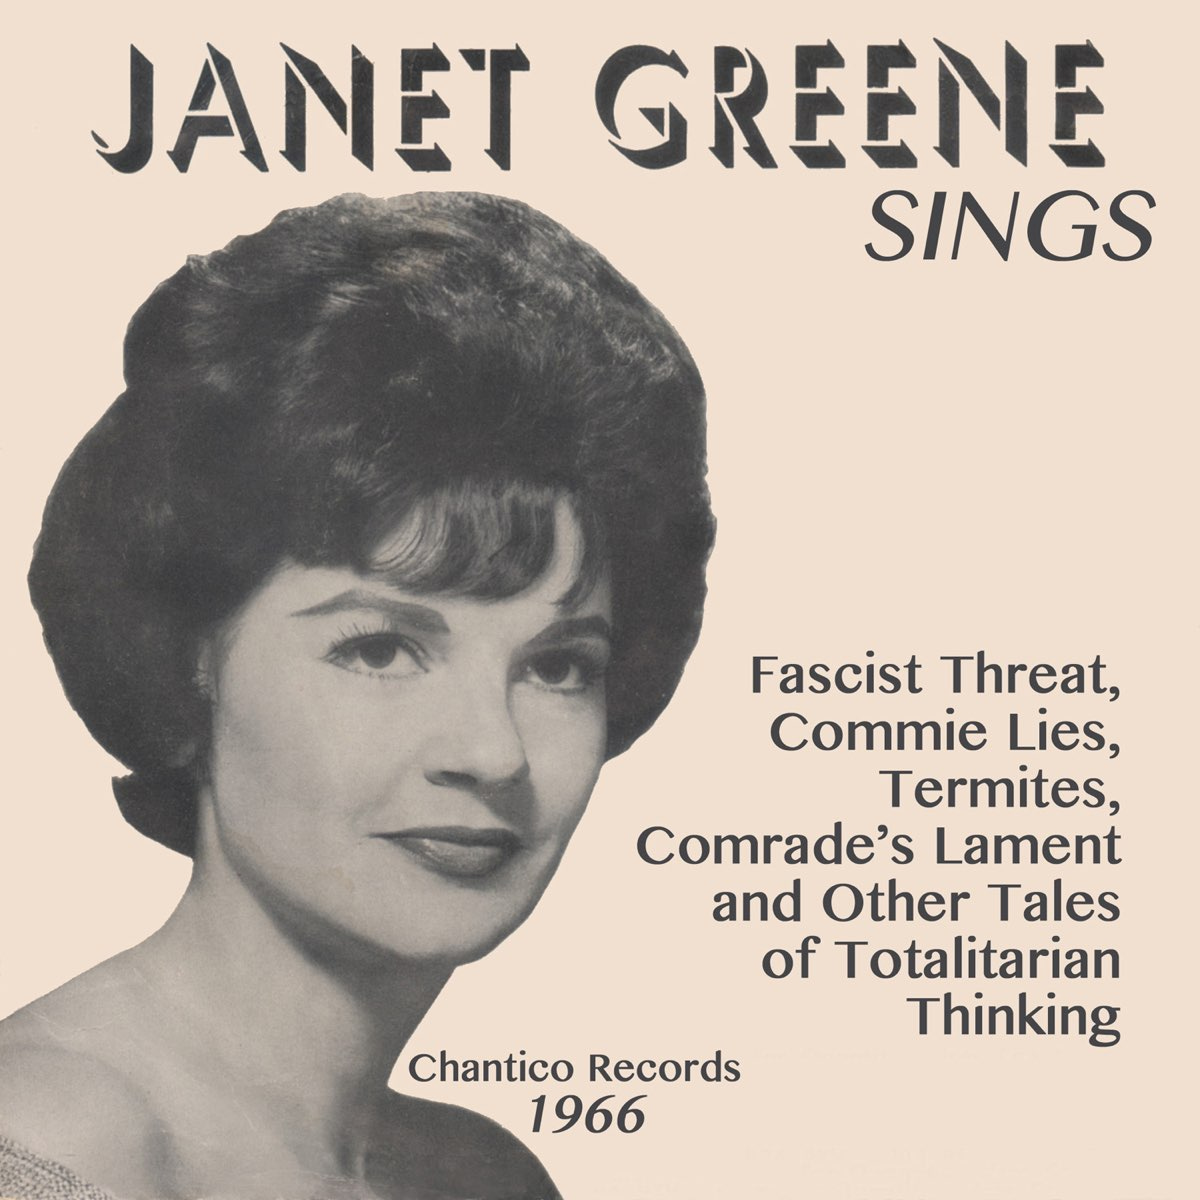 Janet Greene Sings by Janet Greene on Apple Music